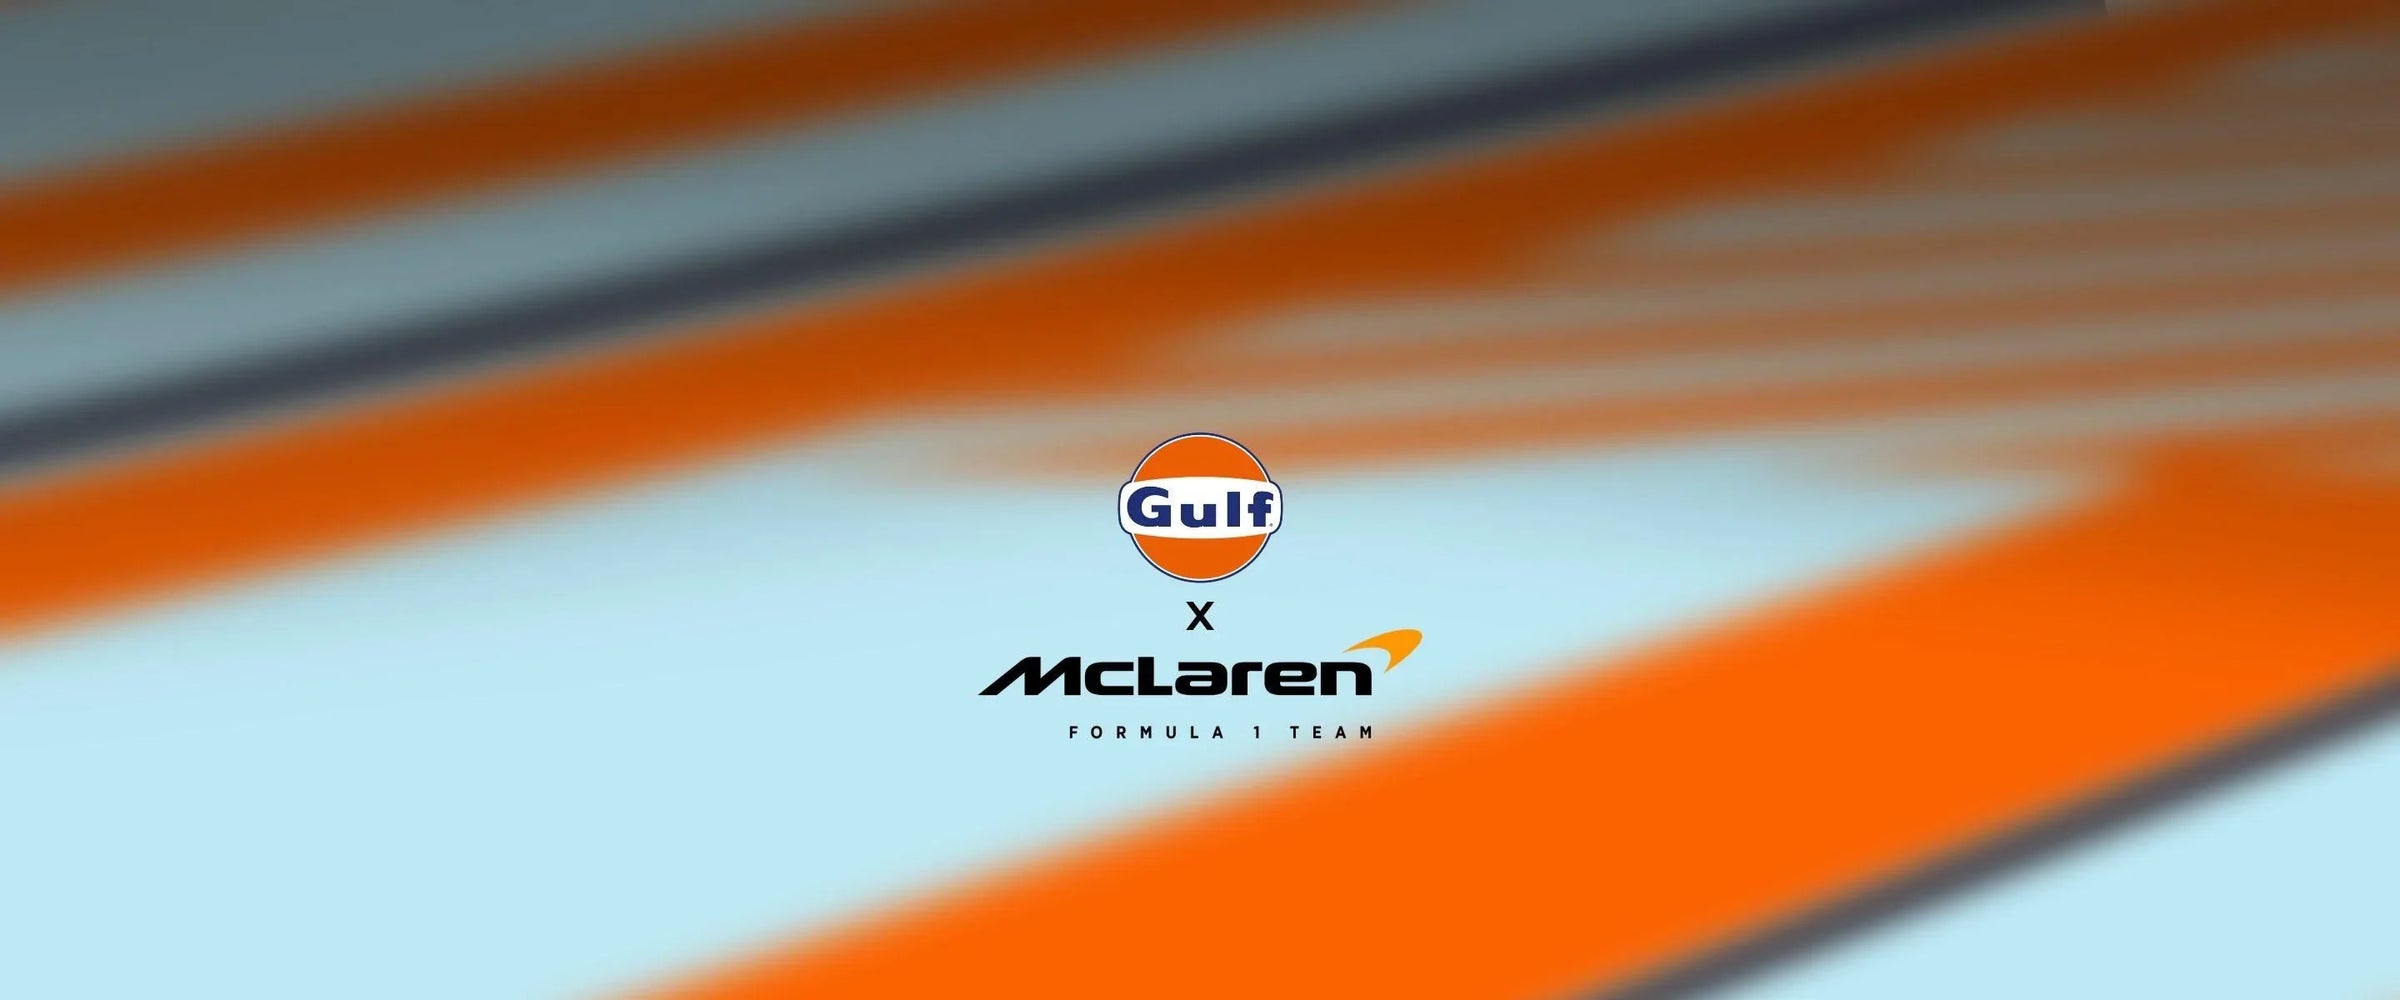 McLaren x Gulf Edition - F1 and Motorpsort Offficial Merchandise - Fueler store